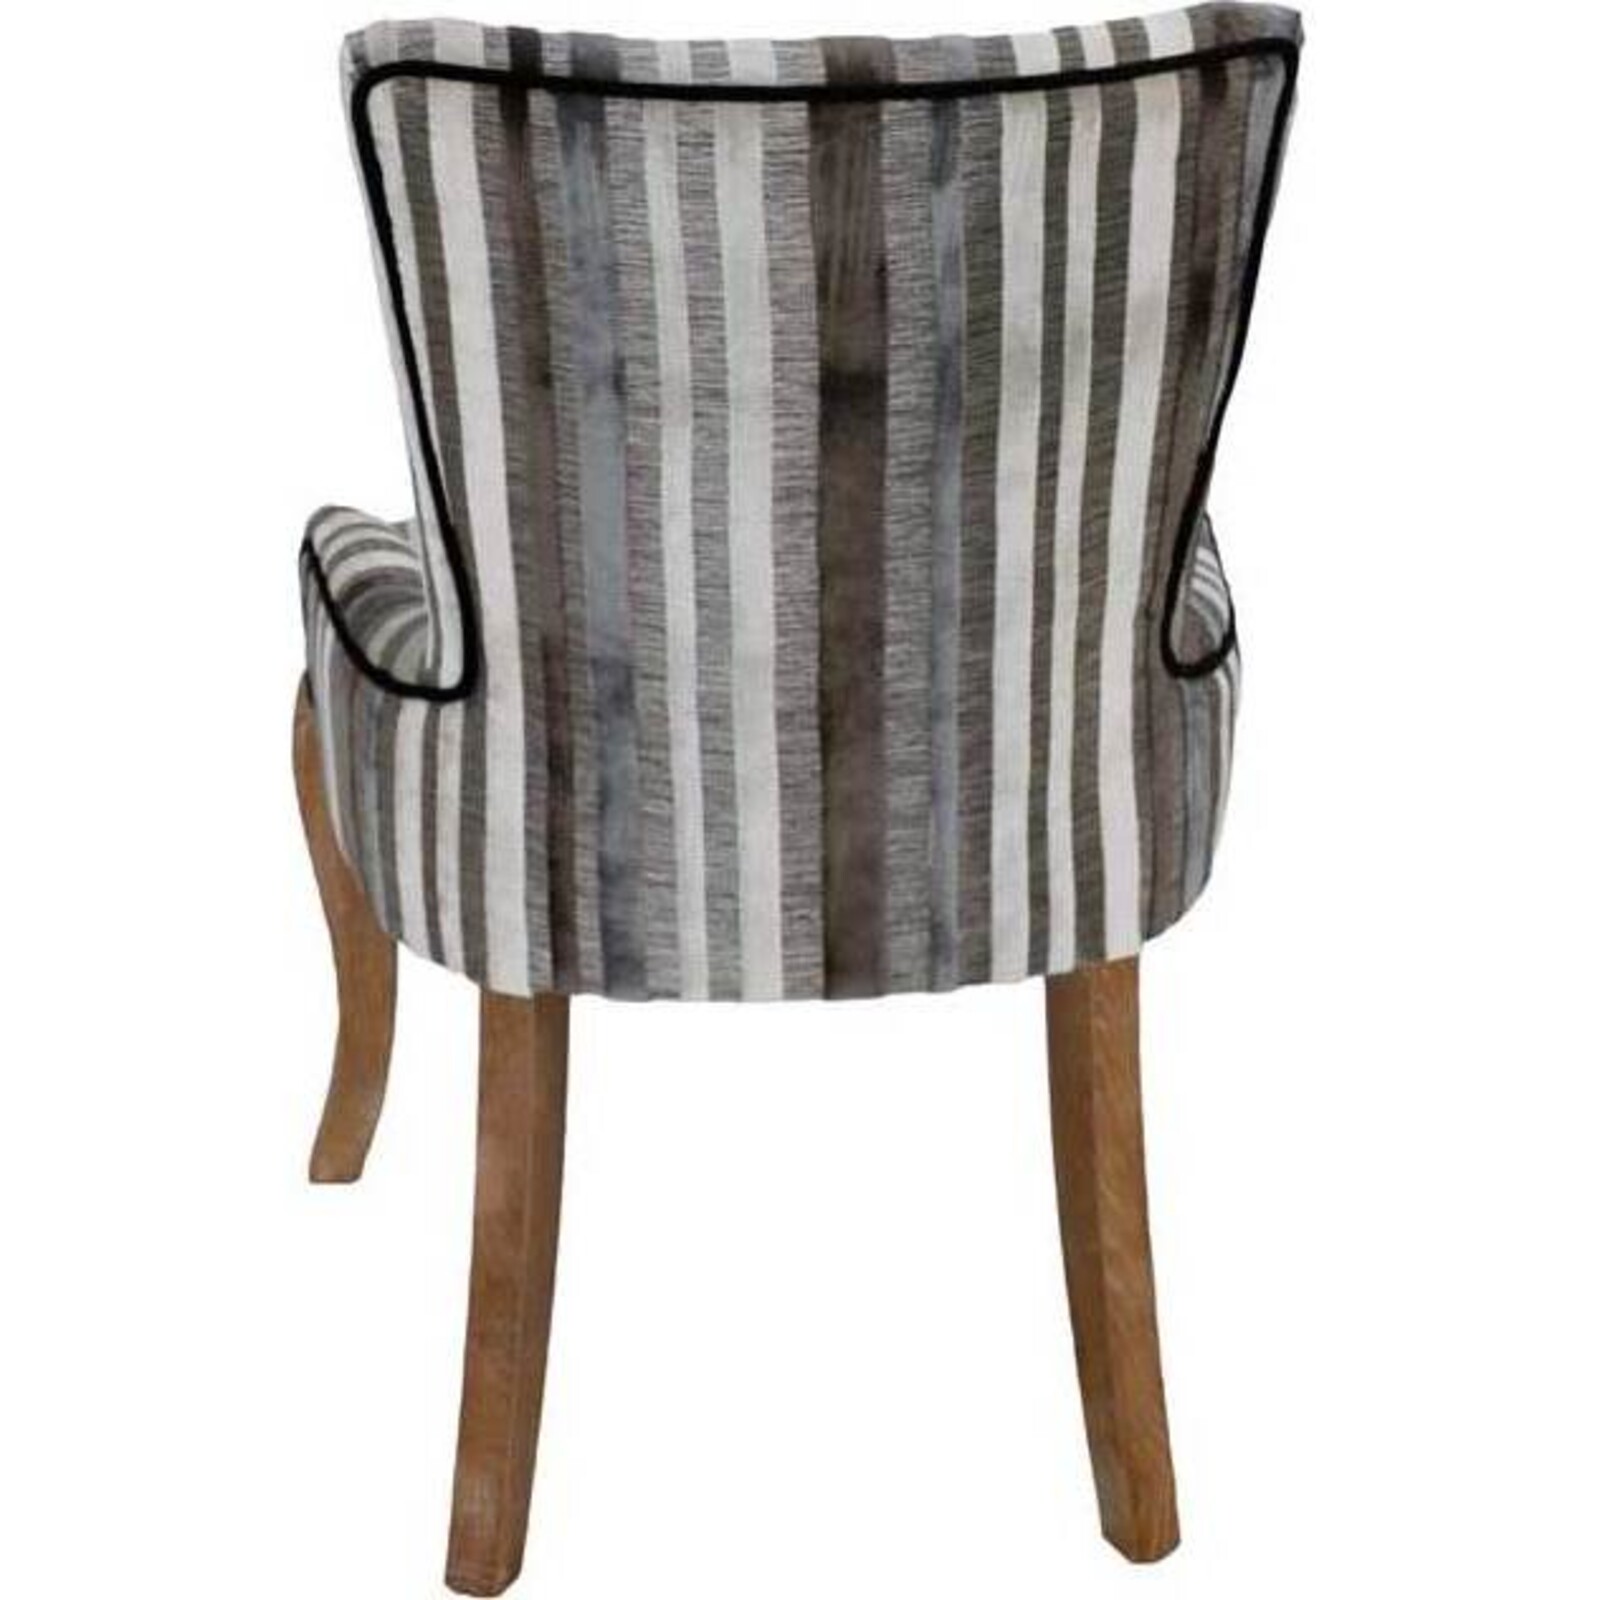 Chair Reggio Grey